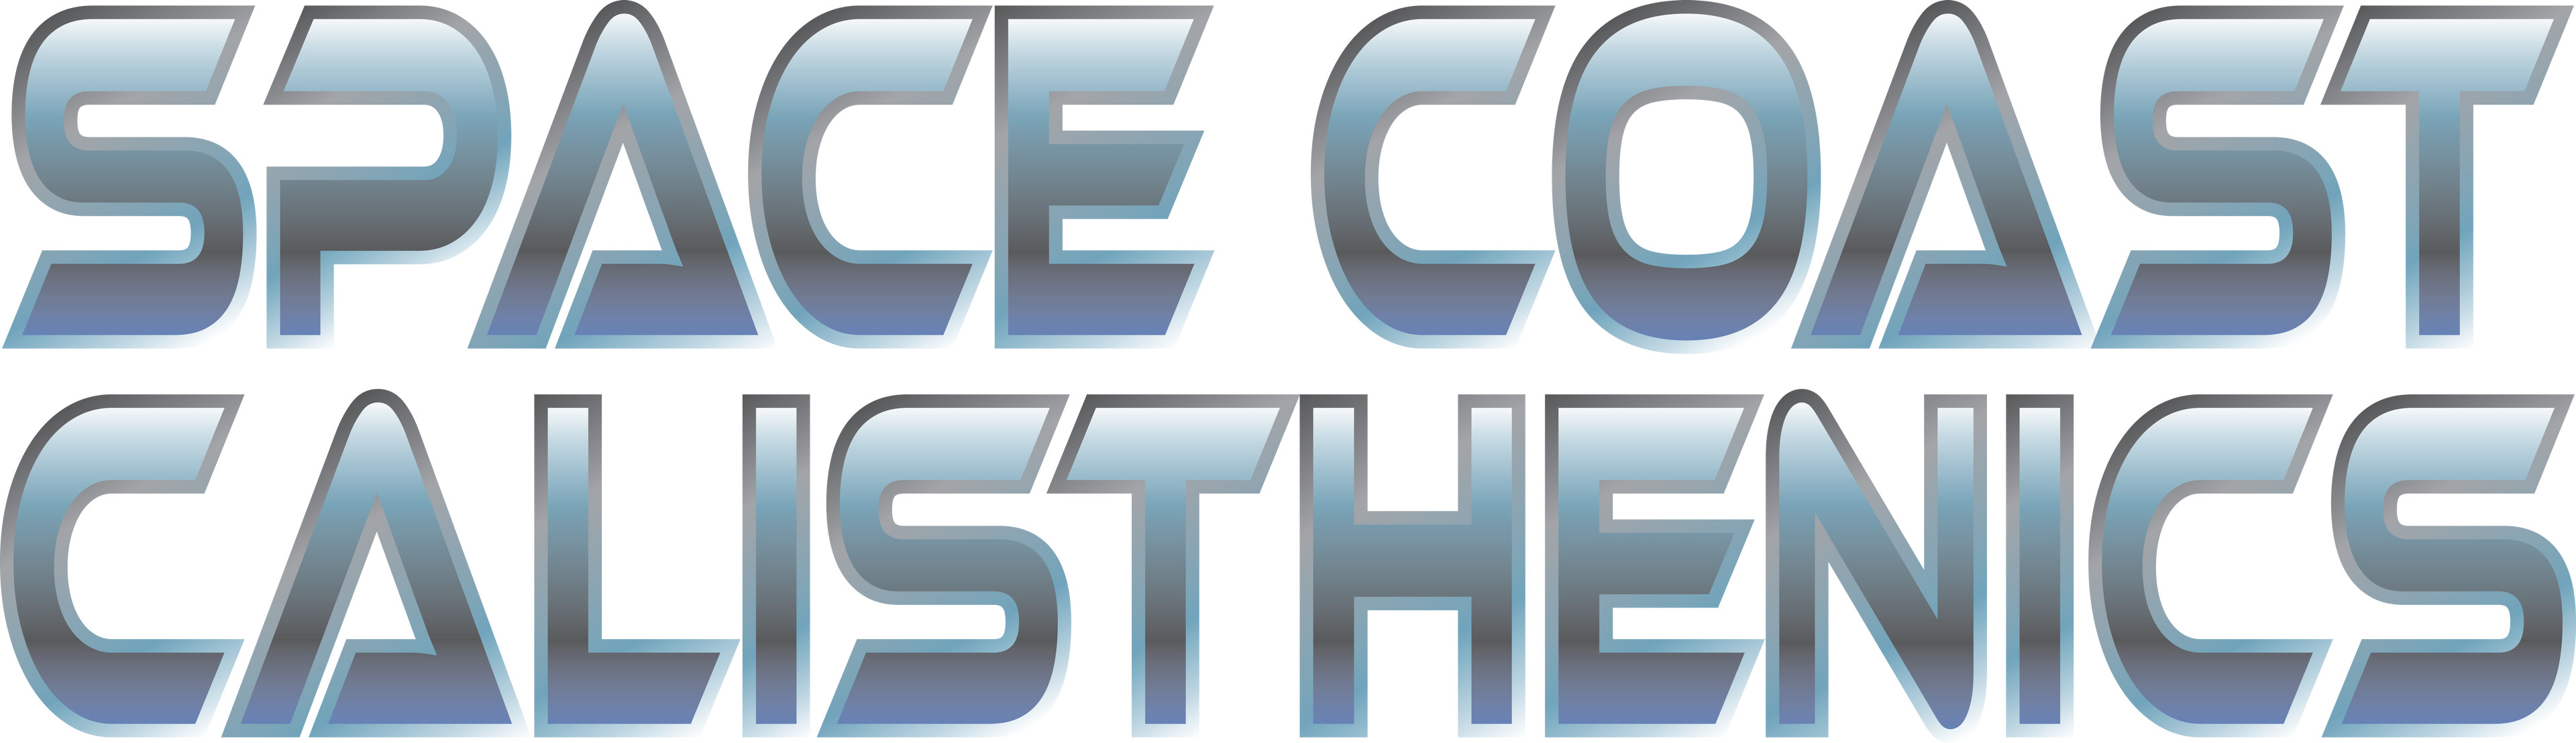 Space Coast Calisthenics logo design. 